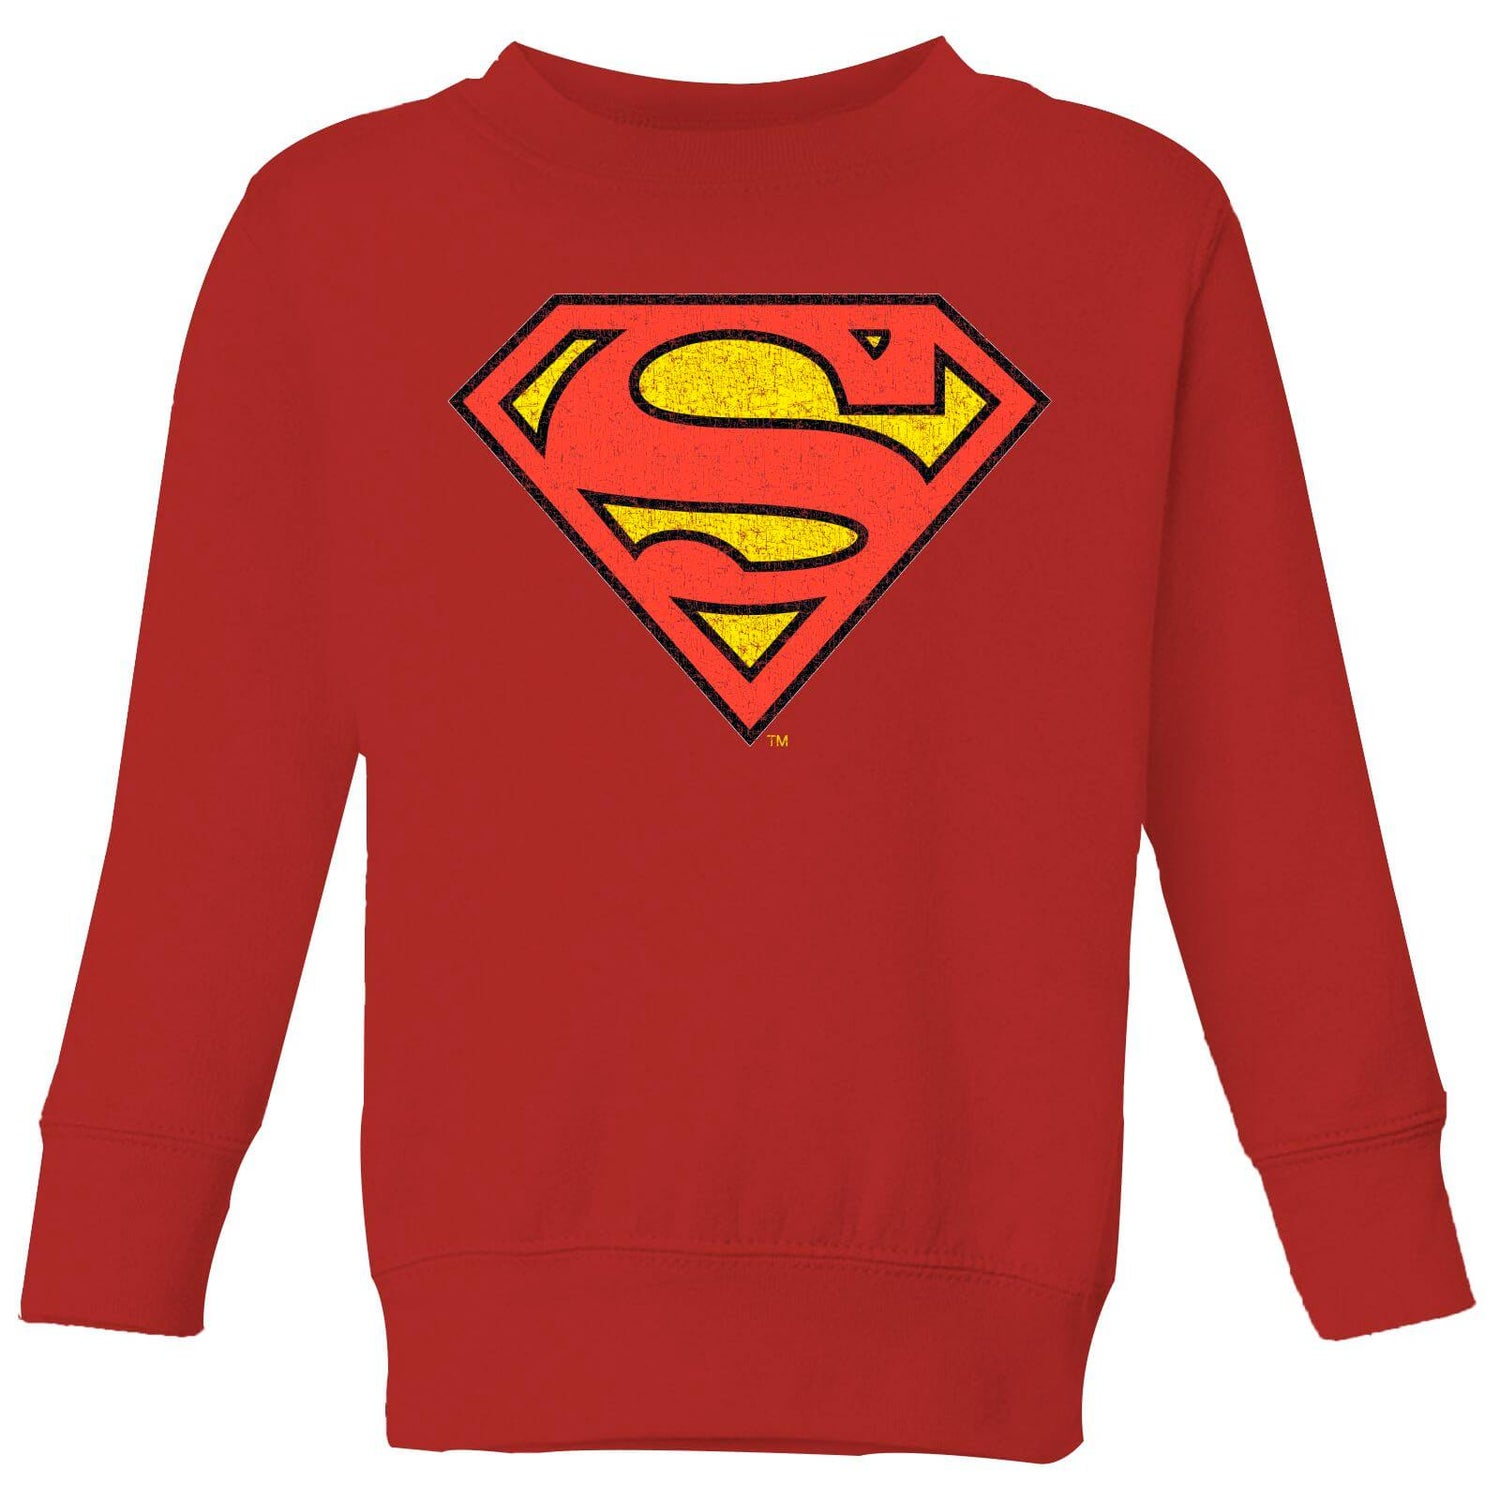 Official Superman Crackle Logo Kids' Sweatshirt - Red